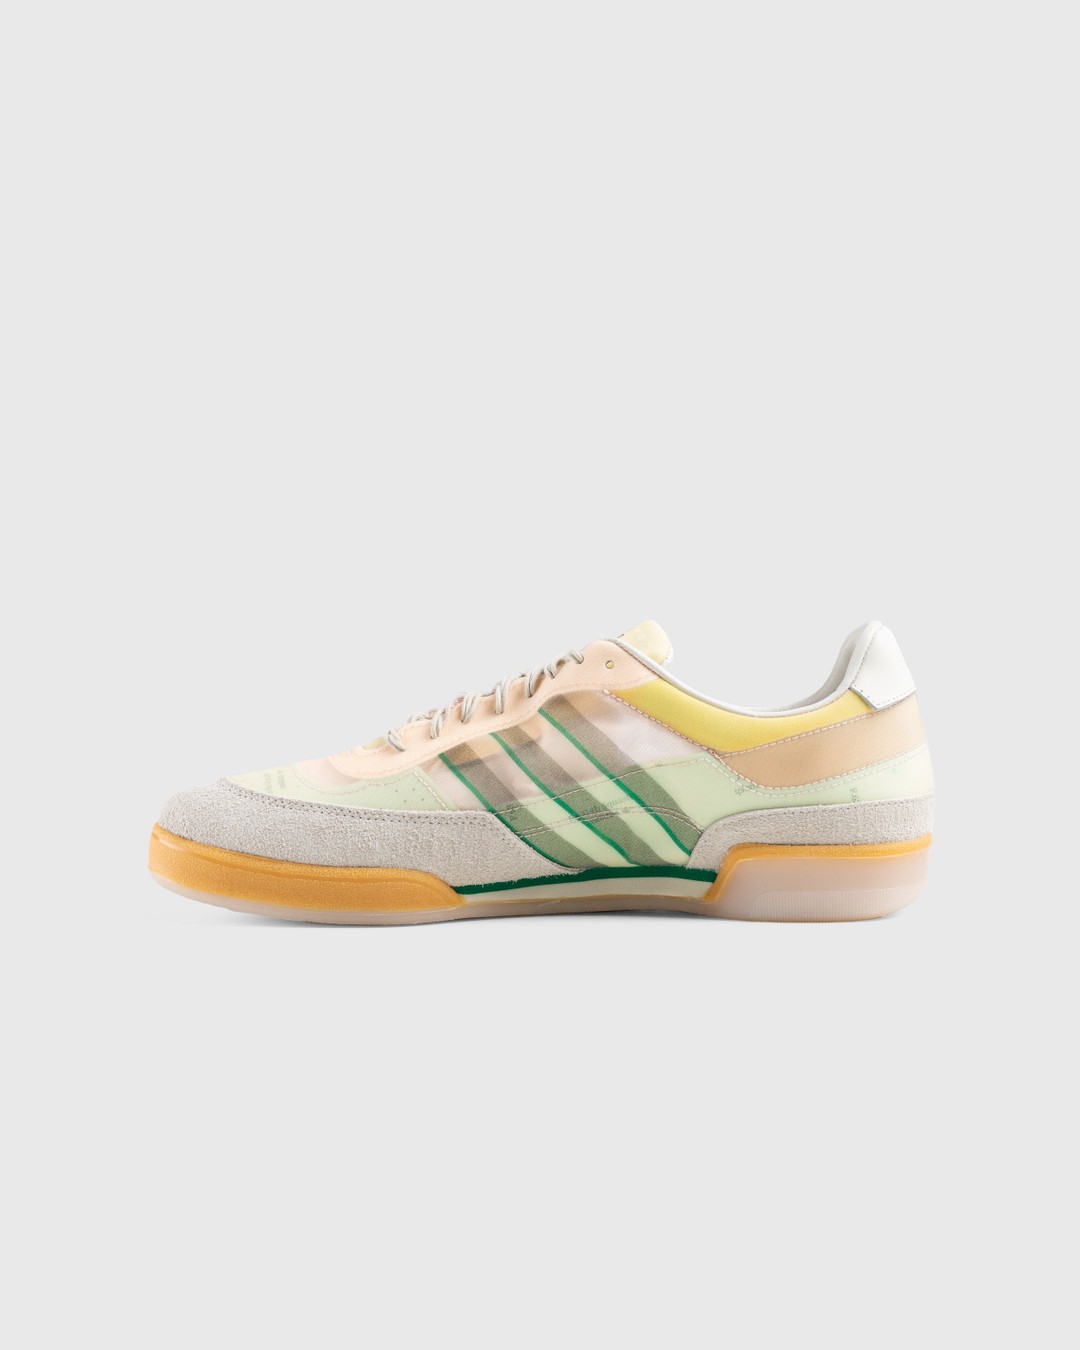 Adidas x Craig Green – Squash Polta Akh Creme - Low Top Sneakers - Beige - Image 2